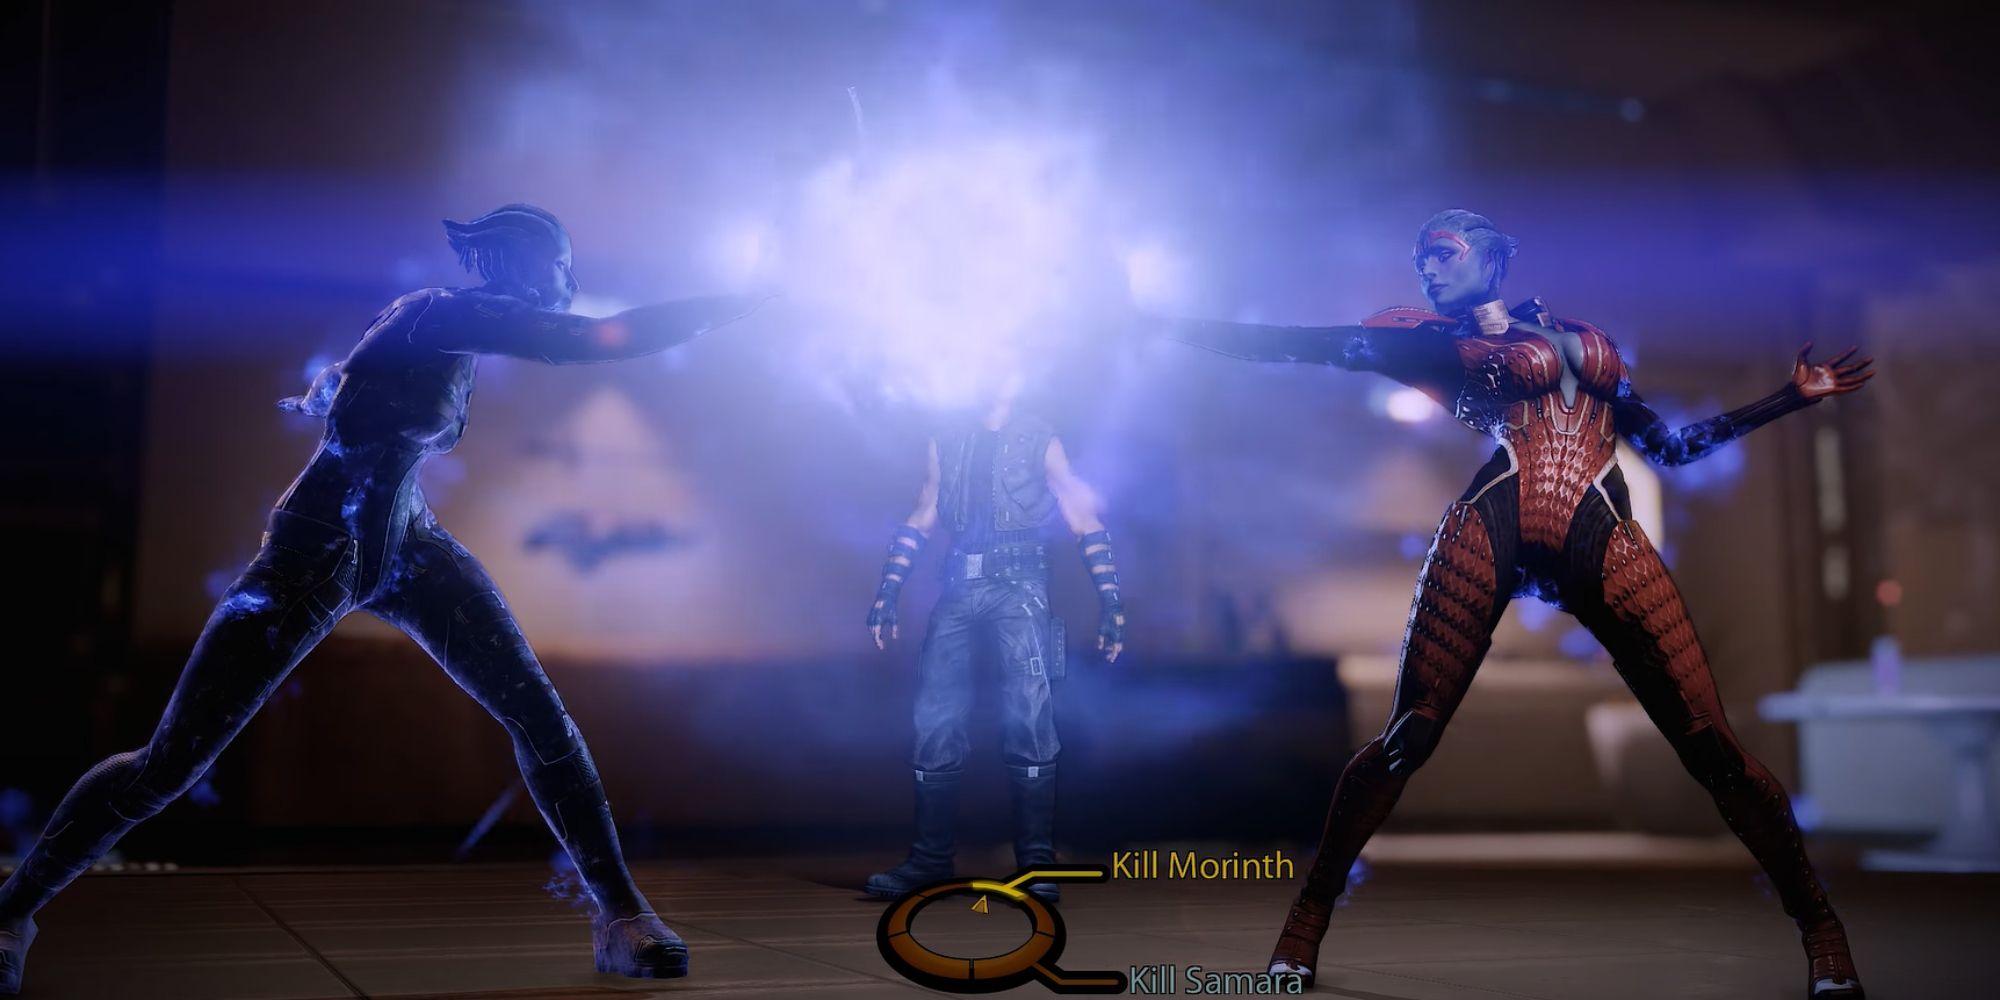 Mass Effect 2 Screenshot Of Morinth and Samara Fighting